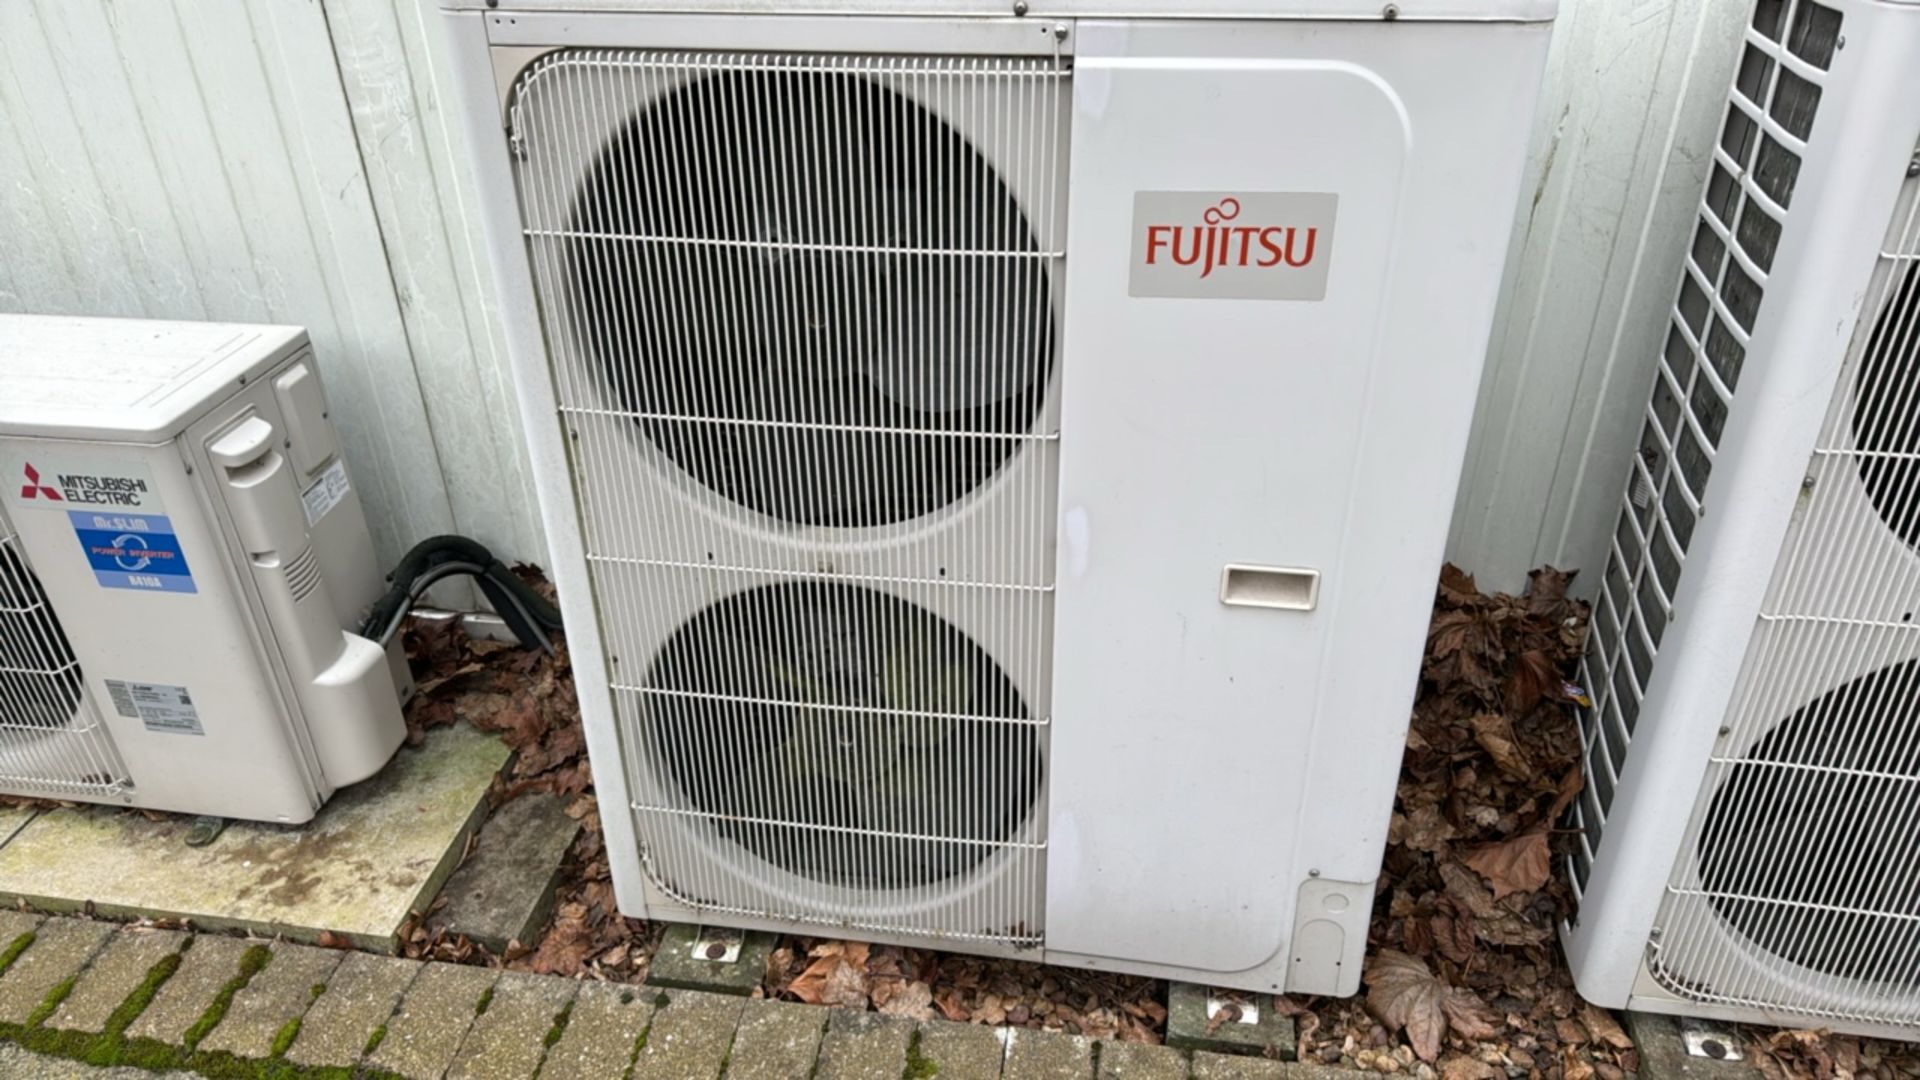 Fujitsu Air Conditoner - Image 2 of 4